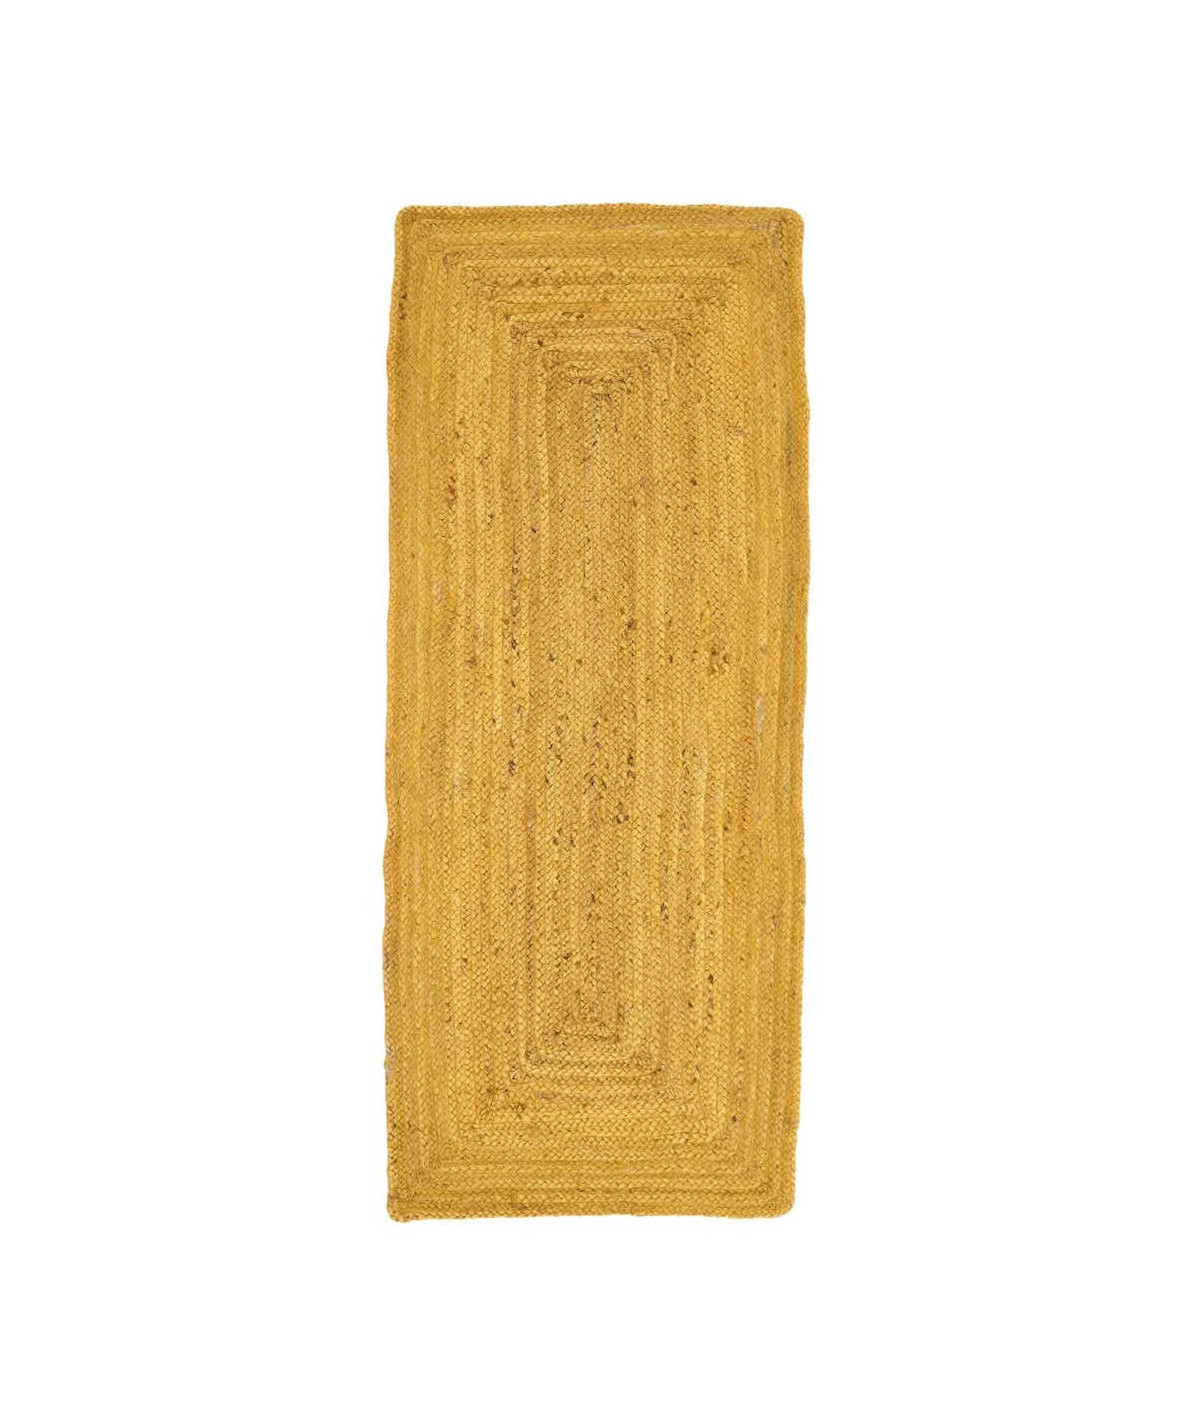 Tapis en jute rectangulaire jaune 70x170cm Blainville - Yesdeko